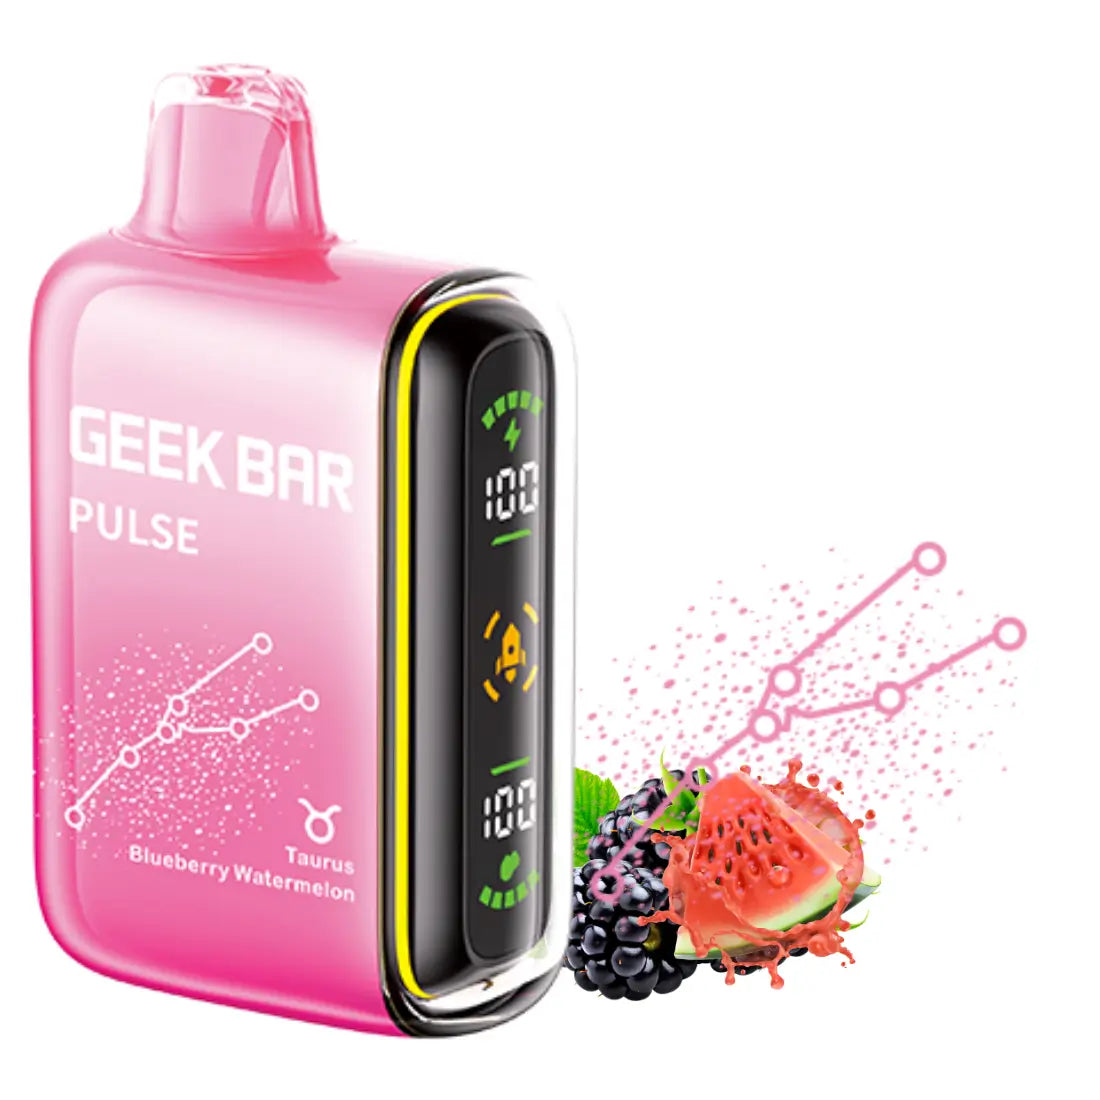 Geek Bar Pulse Colorado Blueberry Watermelon